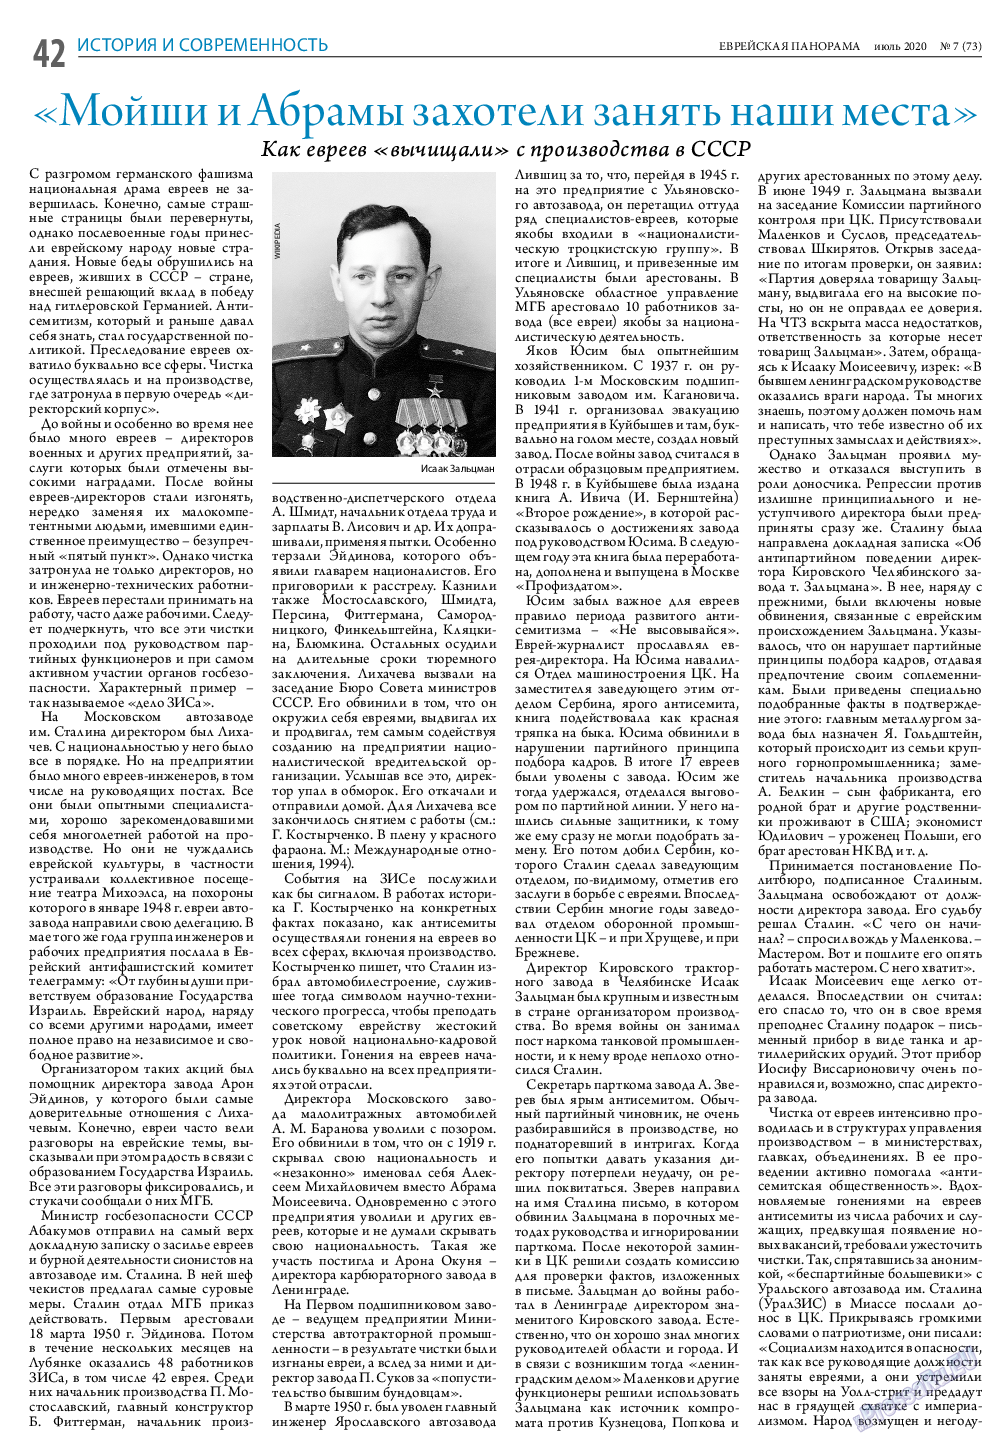 Еврейская панорама, газета. 2020 №7 стр.42